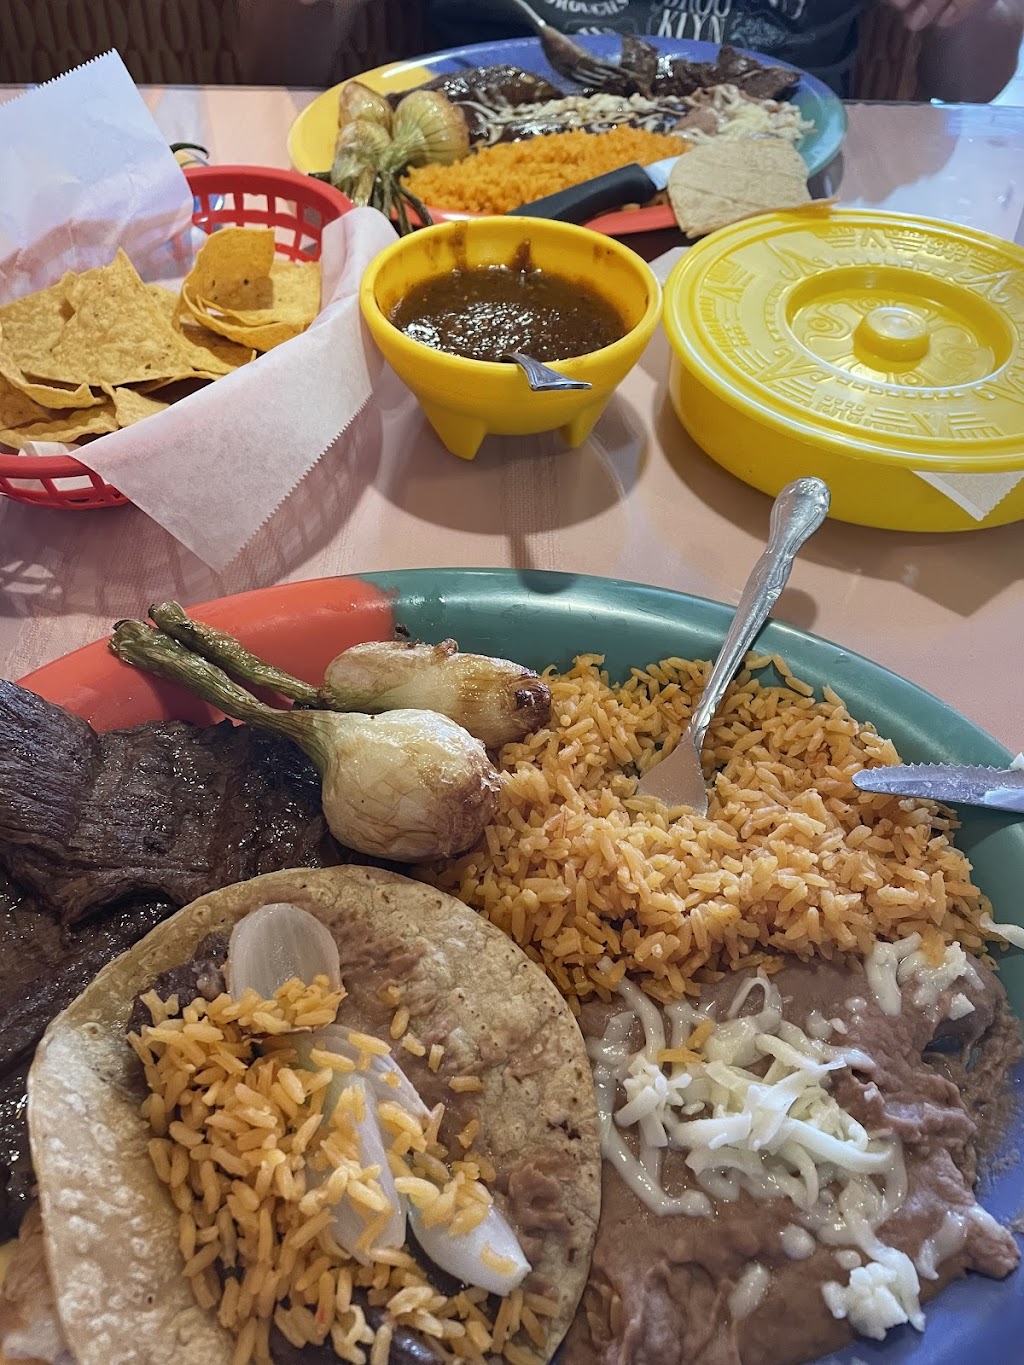 Melys Mexican Cuisine | 16731 Oak Park Ave, Tinley Park, IL 60477, USA | Phone: (708) 620-8054